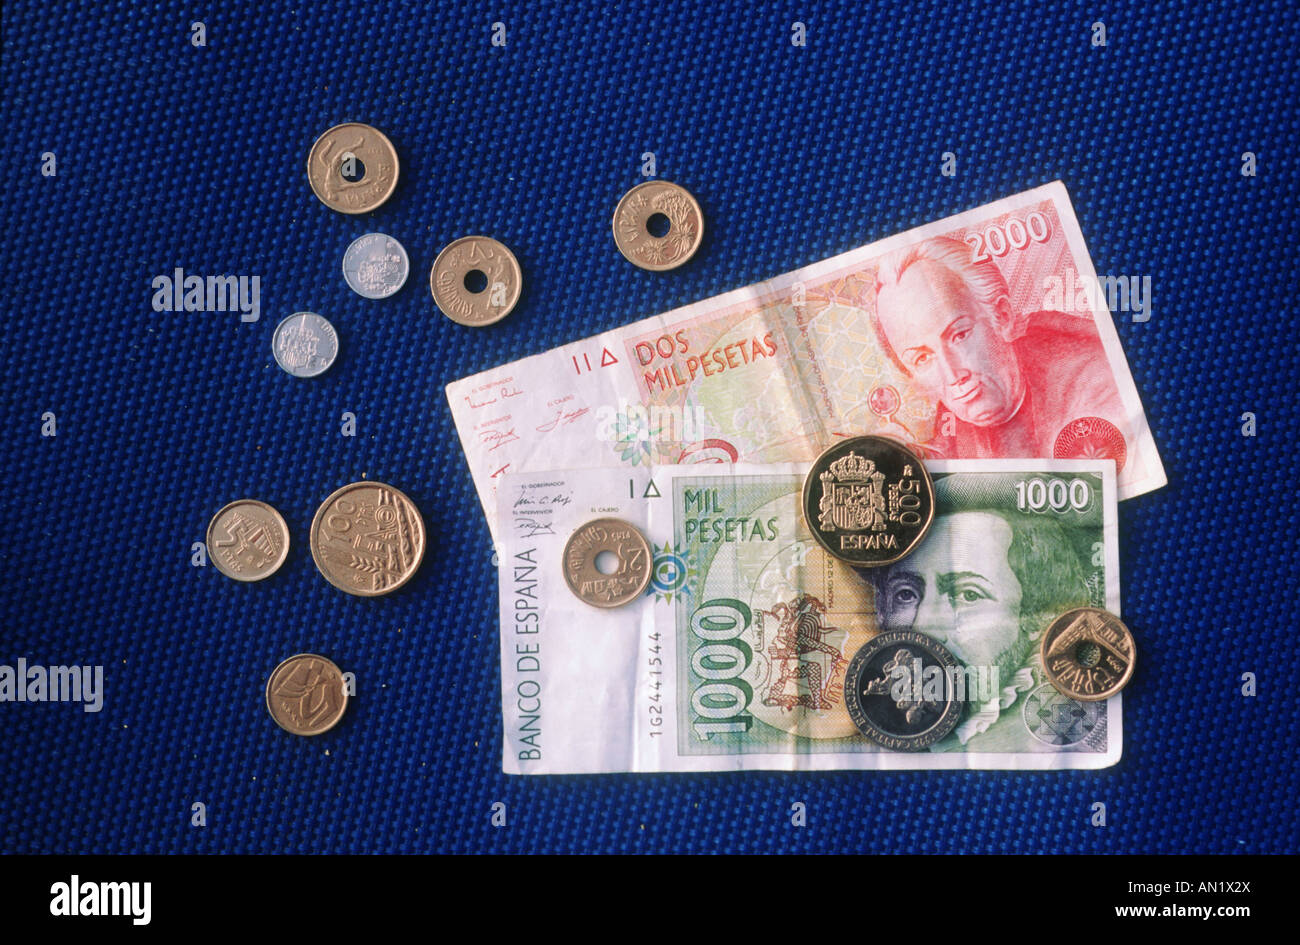 Spanish money. Stock Photo